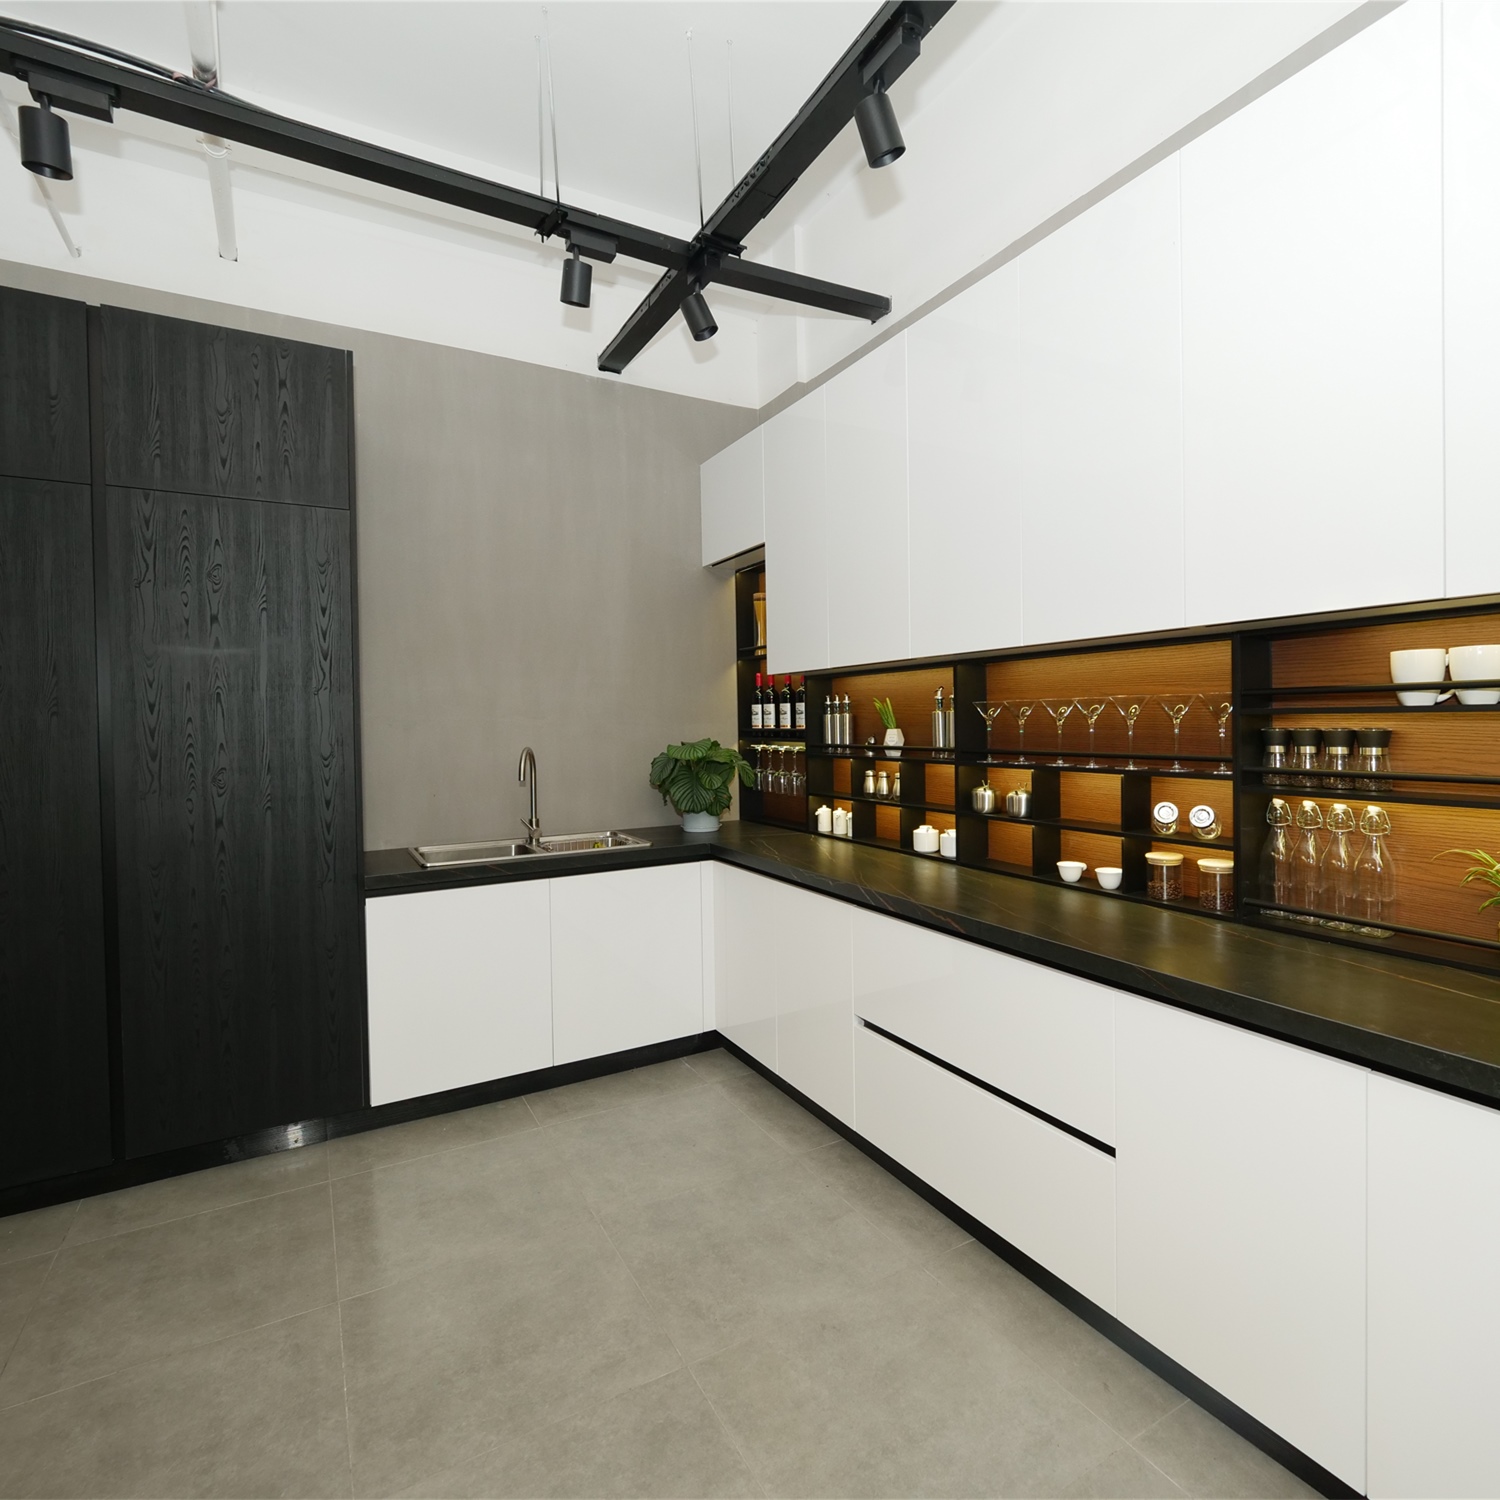 AisDecor gray cabinets kitchen from China-2